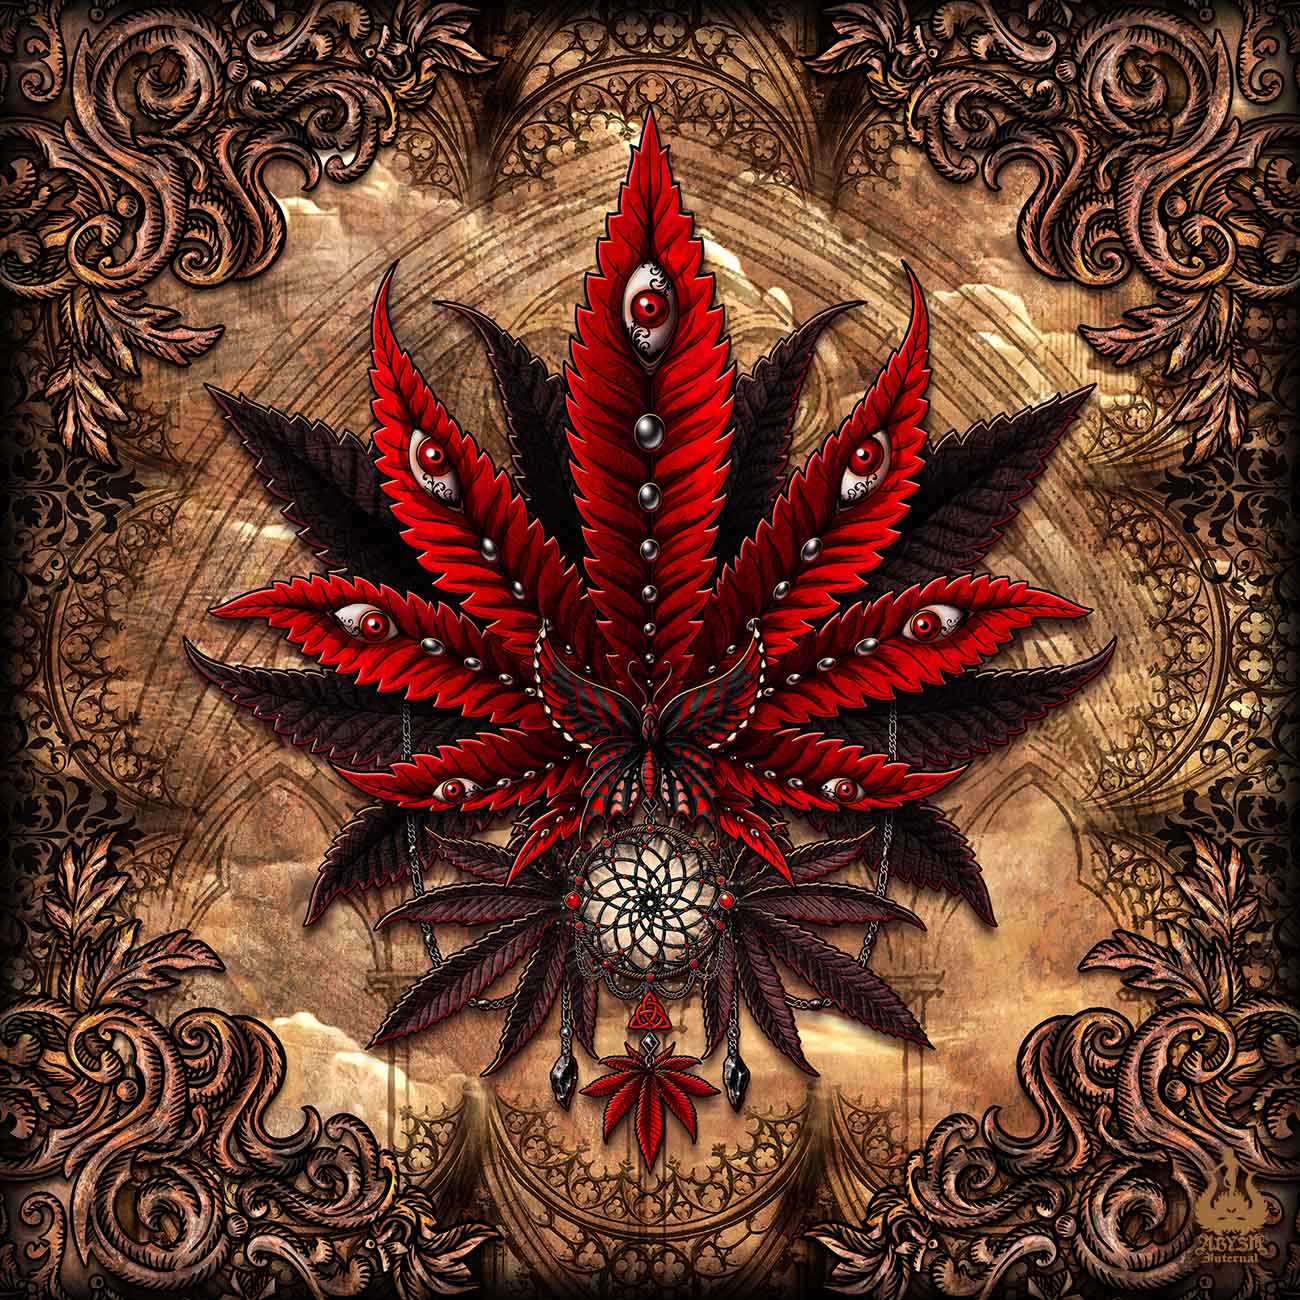 Cannabis - Abysm Internal